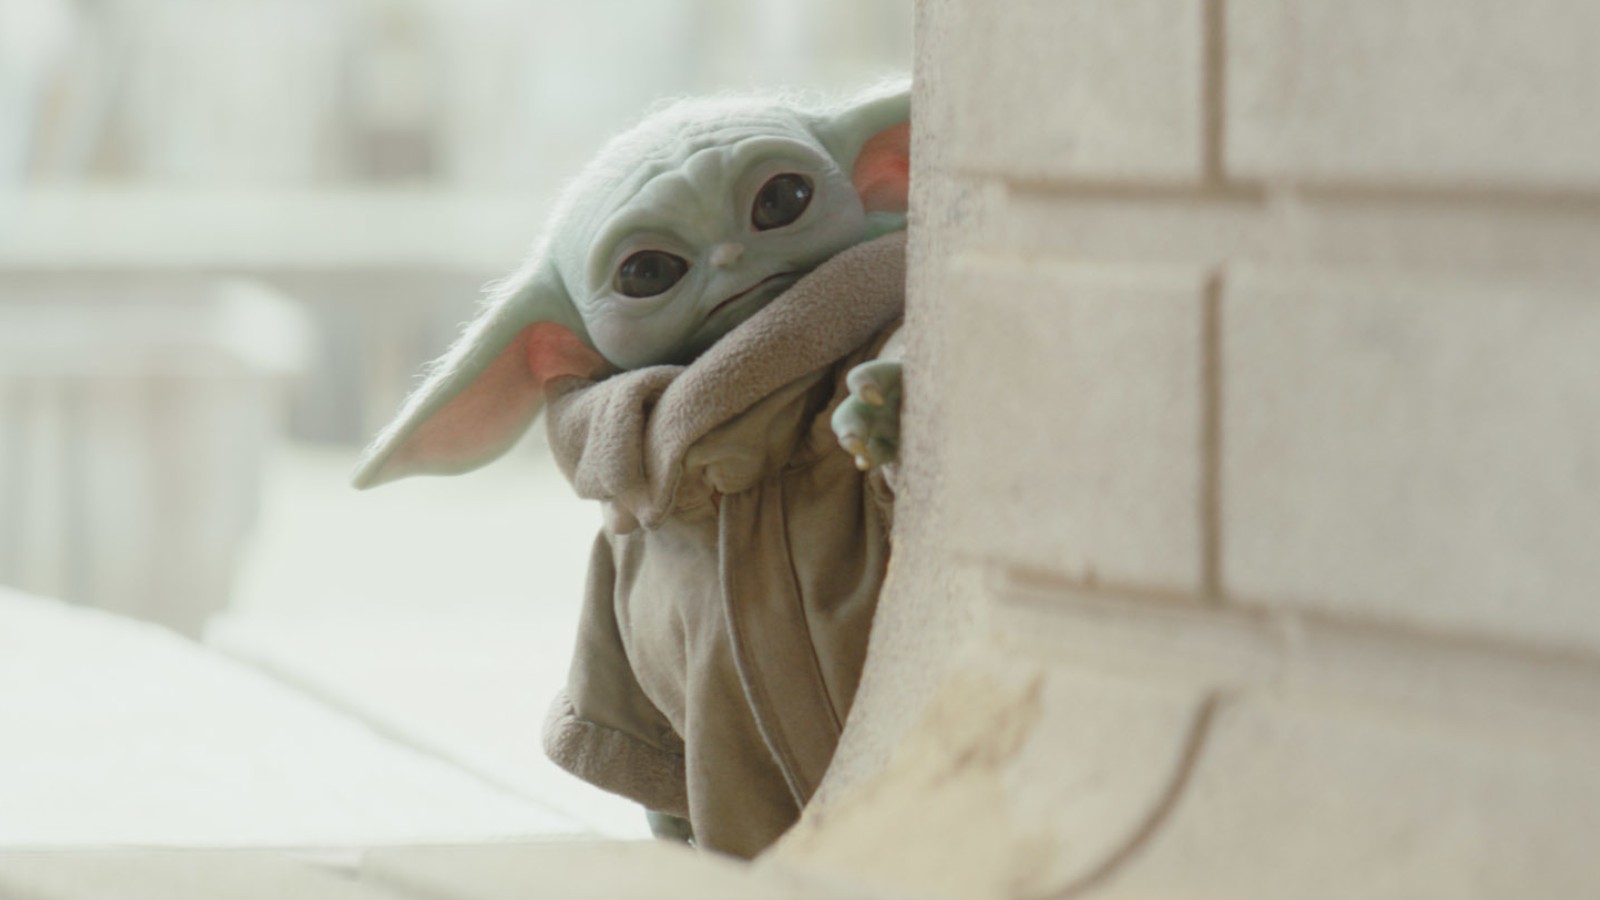 Grogu in 'The Mandalorian' - Baby Yoda Name, Background Revealed